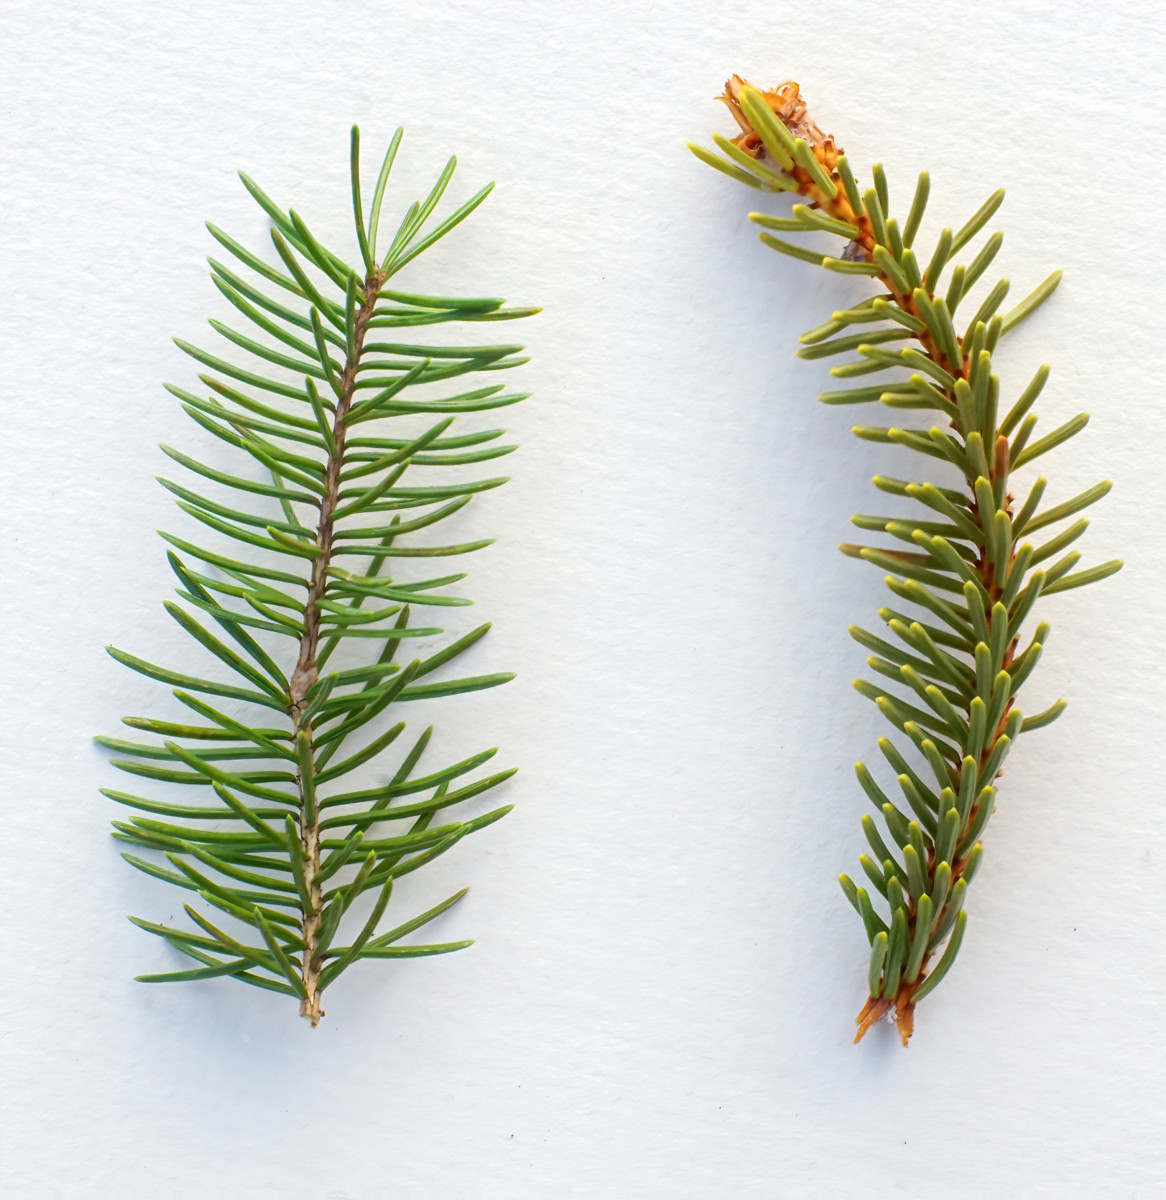 L: White Spruce needles R: Black Spruce needles